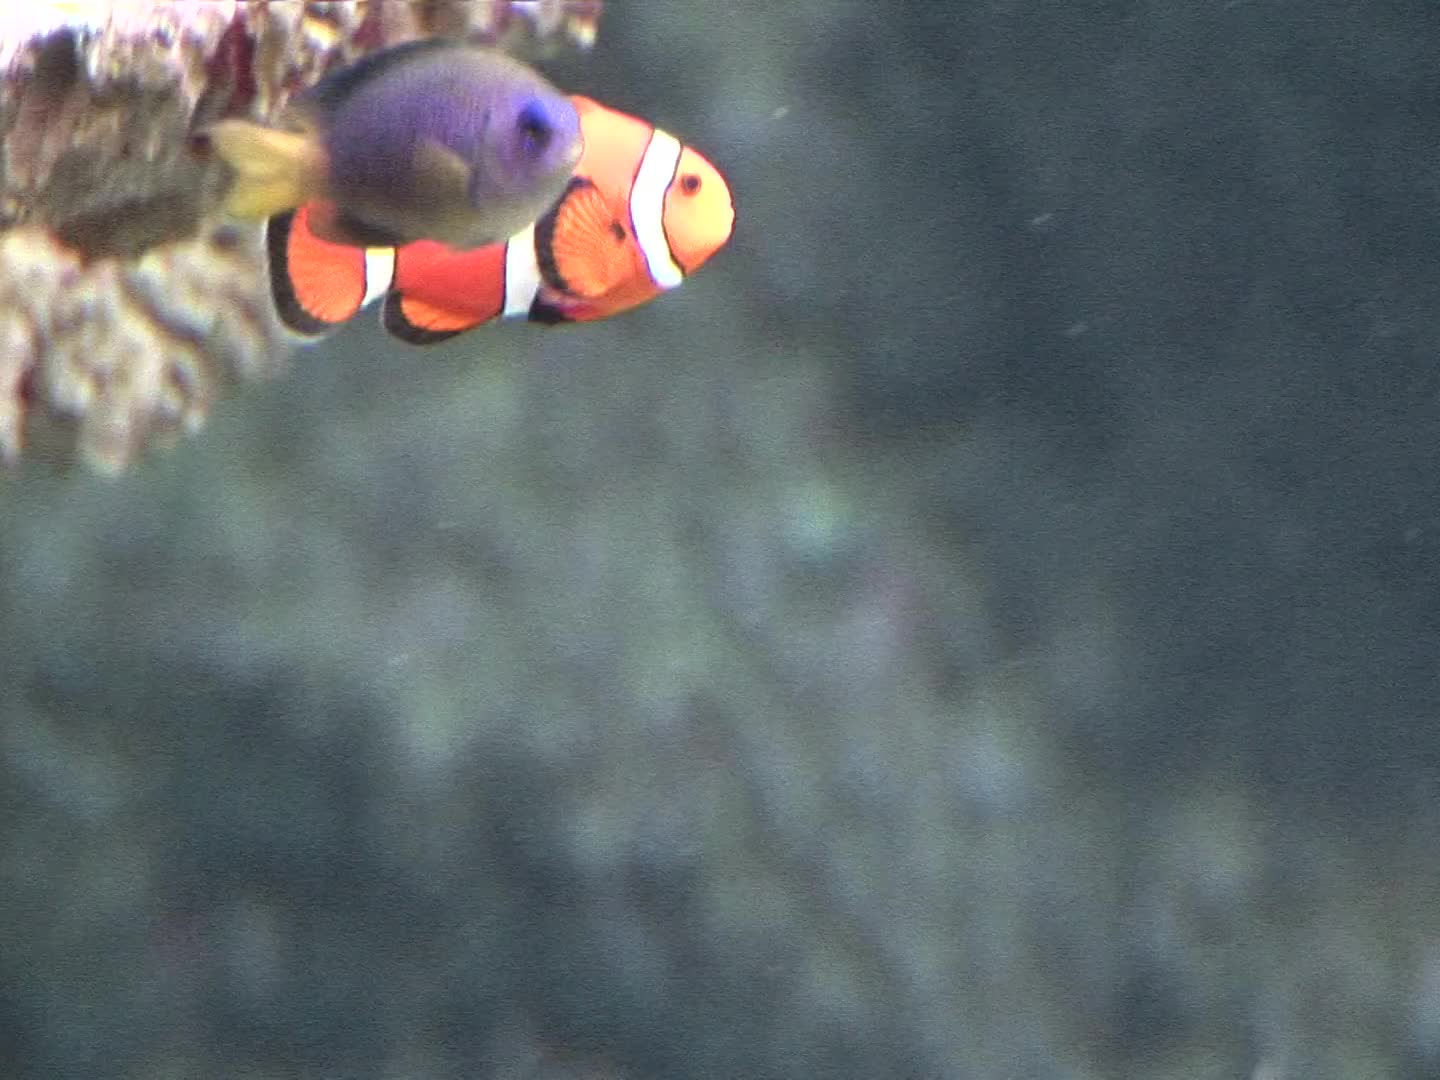 Aquarium Clownfish II